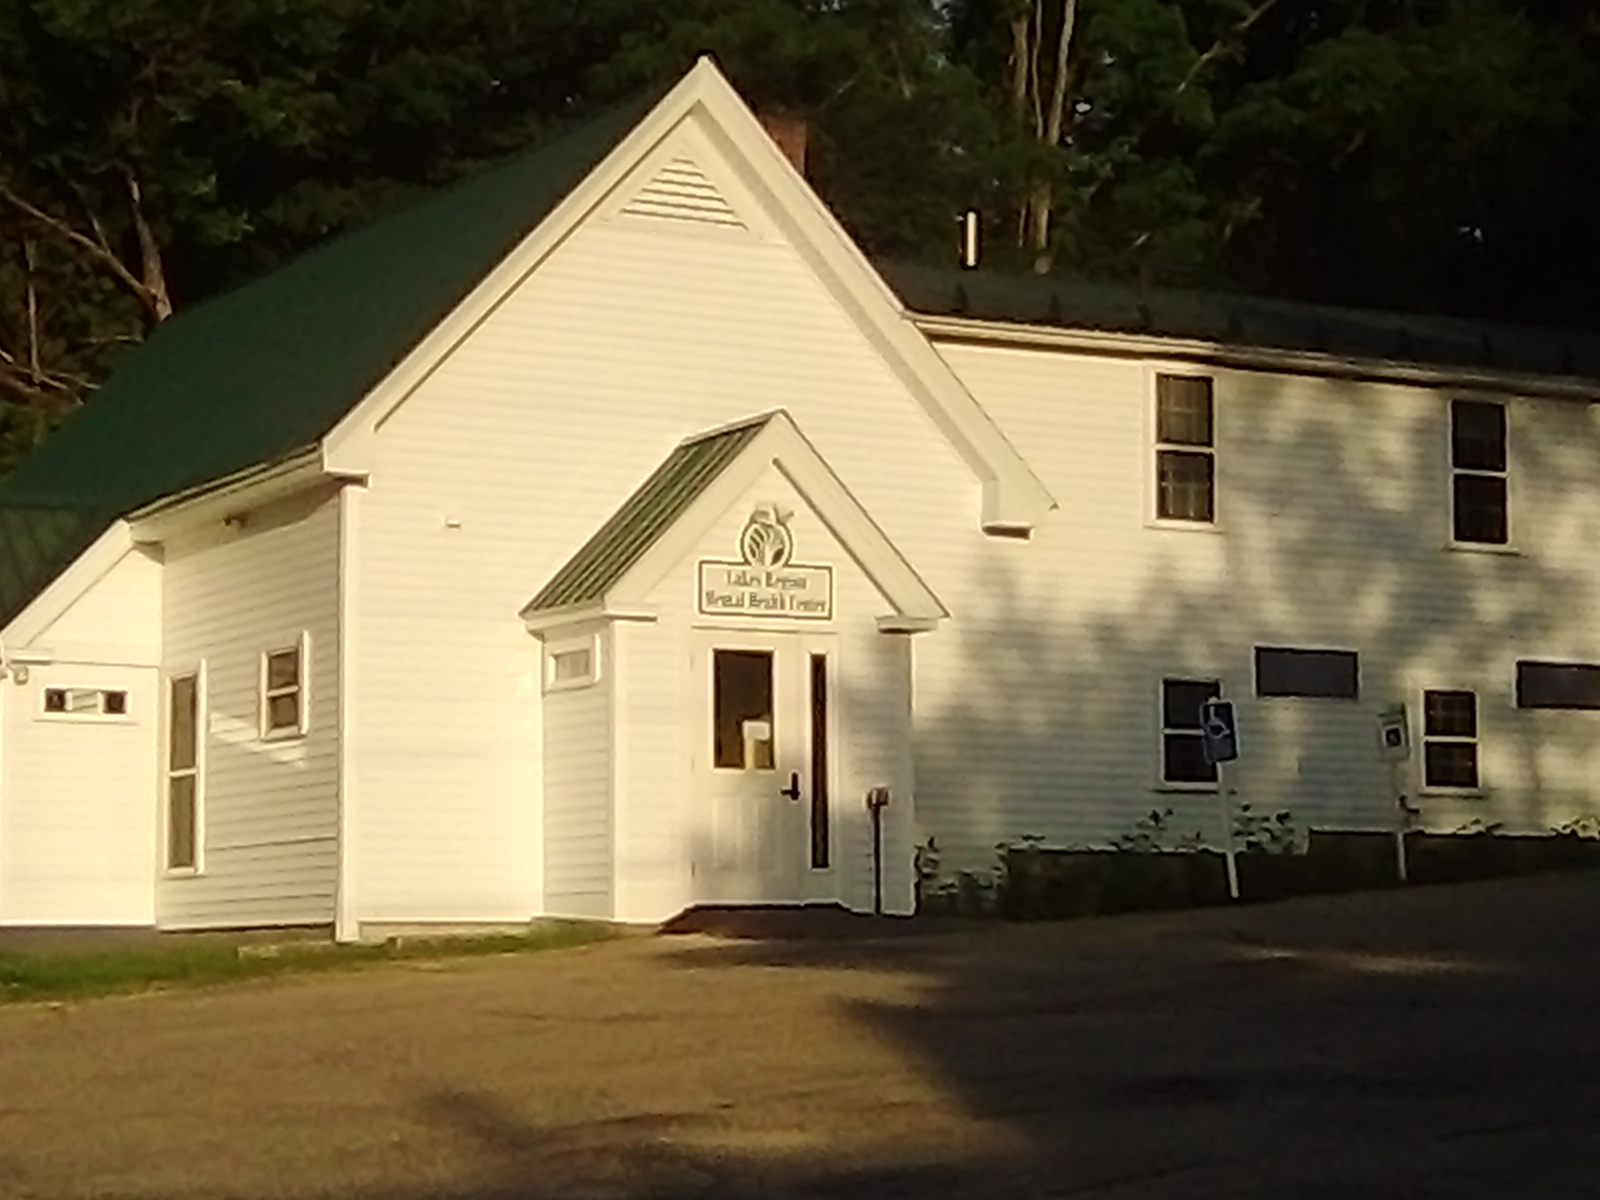 Lakes Region Mental Health Center